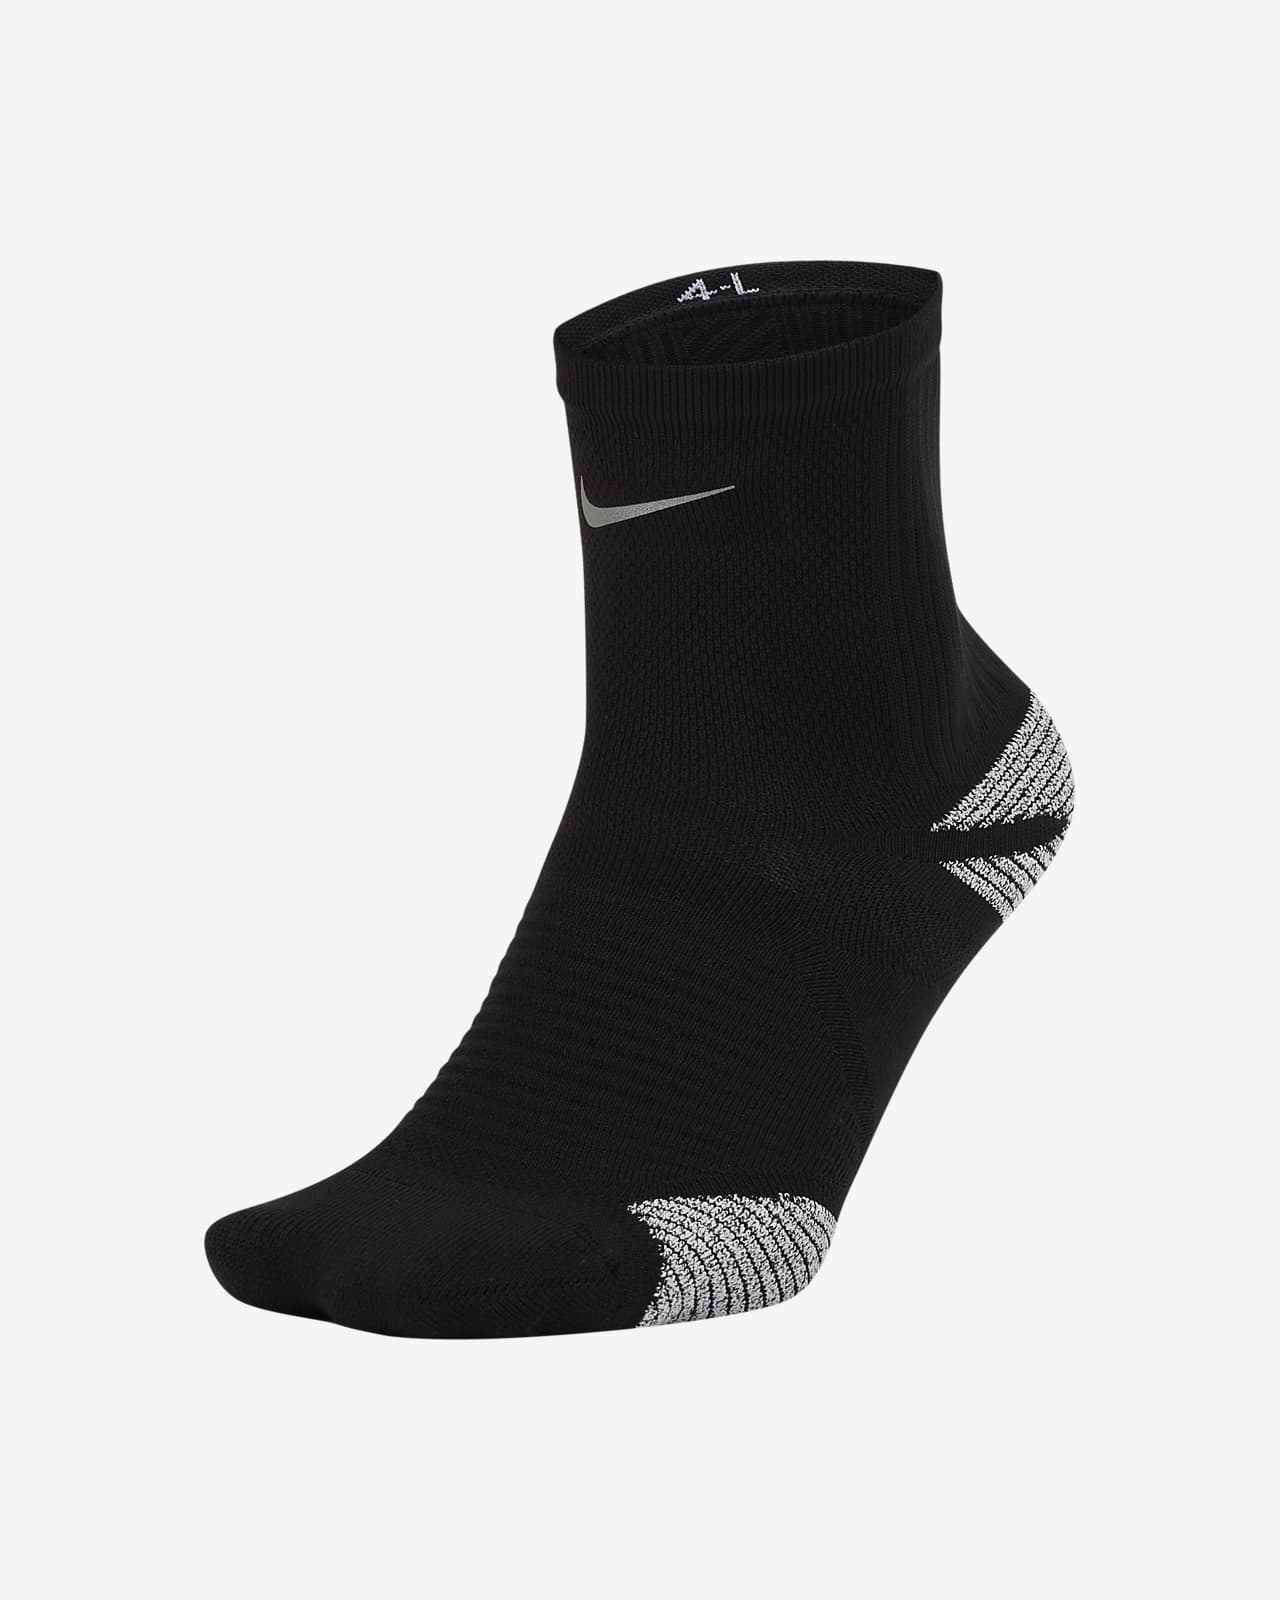 Calze alla caviglia Nike Racing